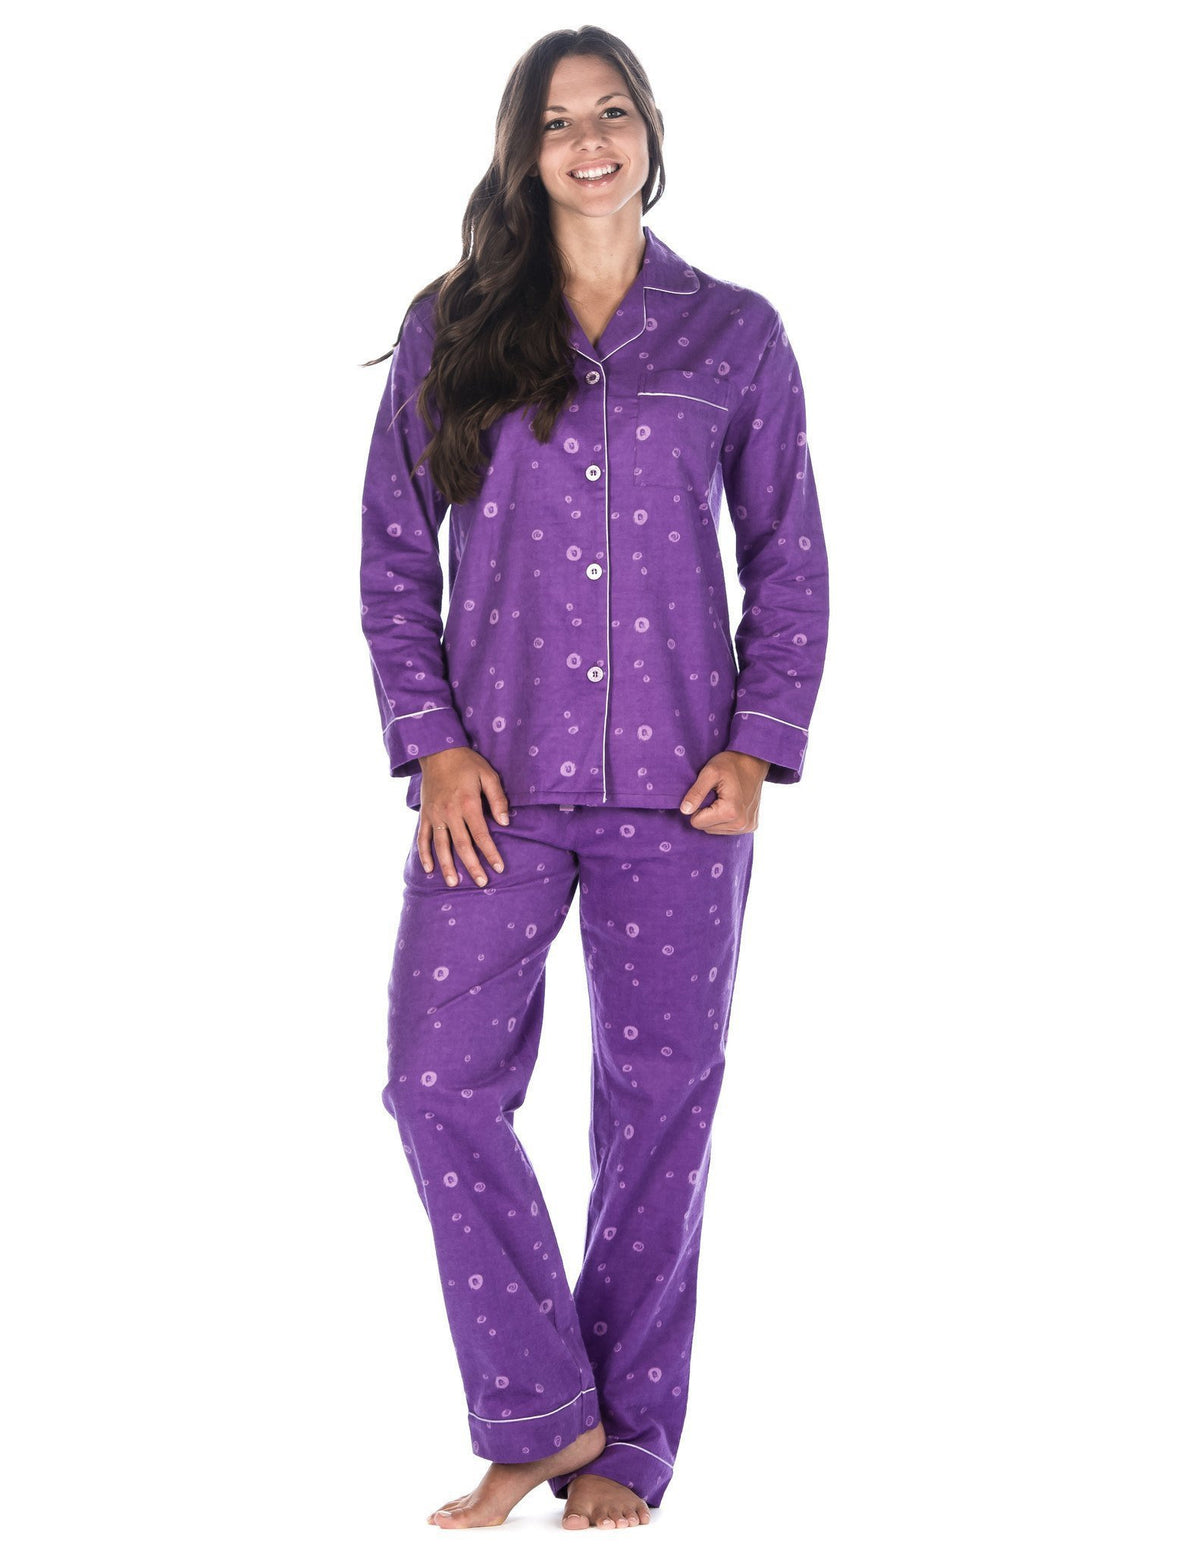 Women's Premium 100% Cotton Flannel Pajama Sleepwear Set (Relaxed Fit) - Swirl - Lavender